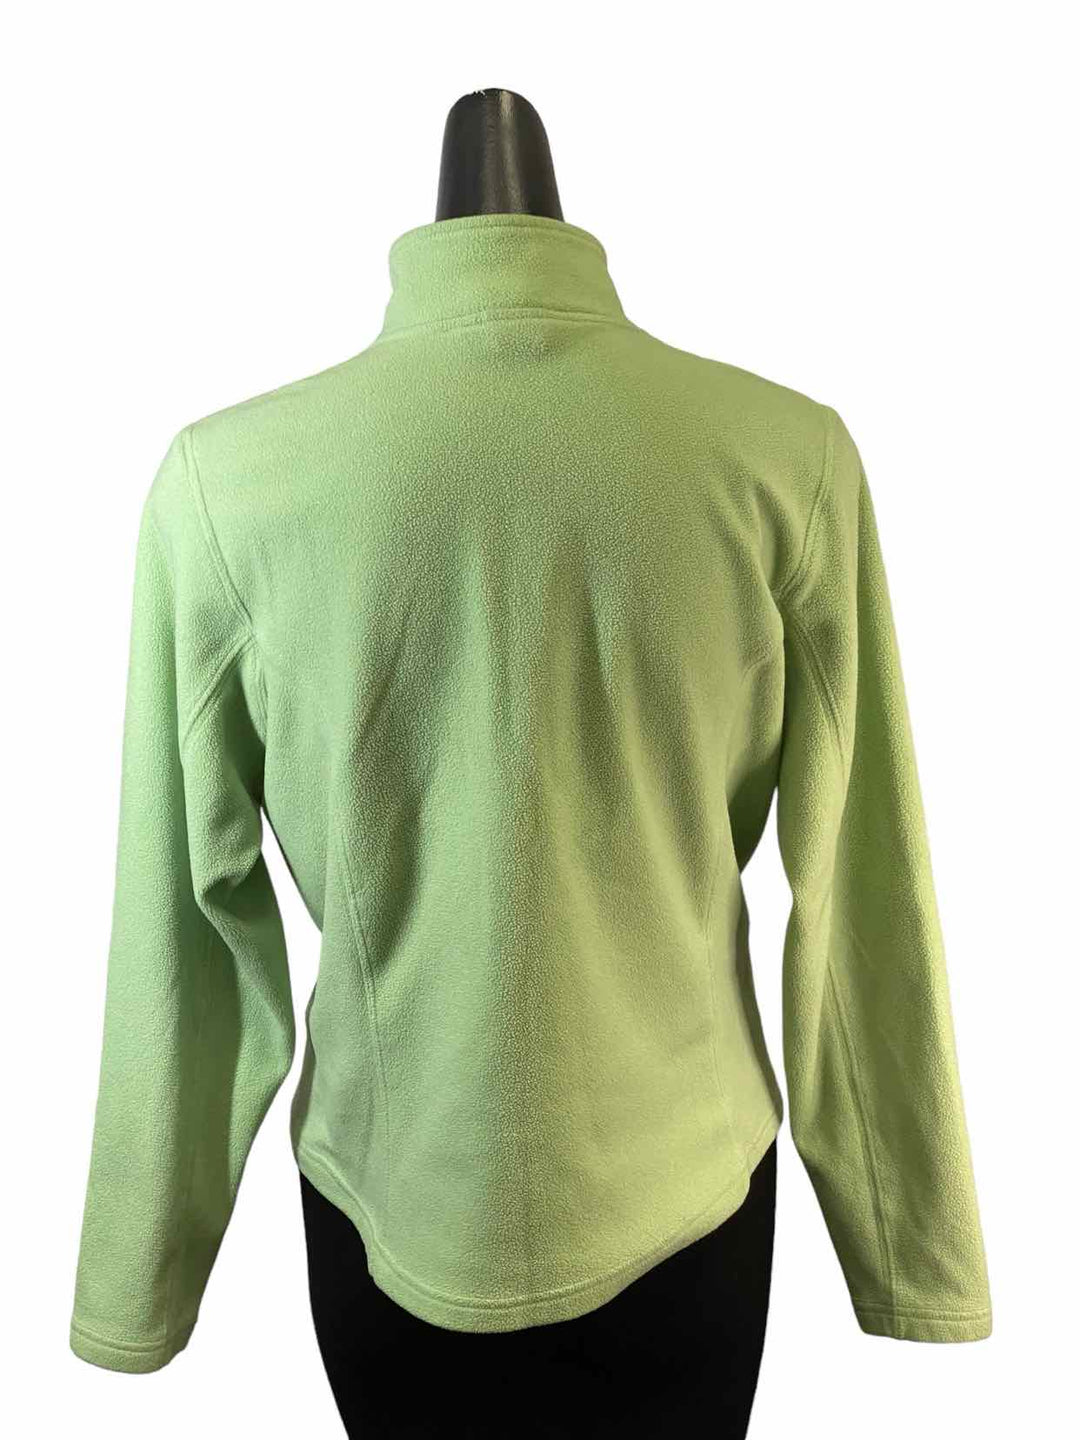 LL Bean Size M Green Jacket (Outdoor)